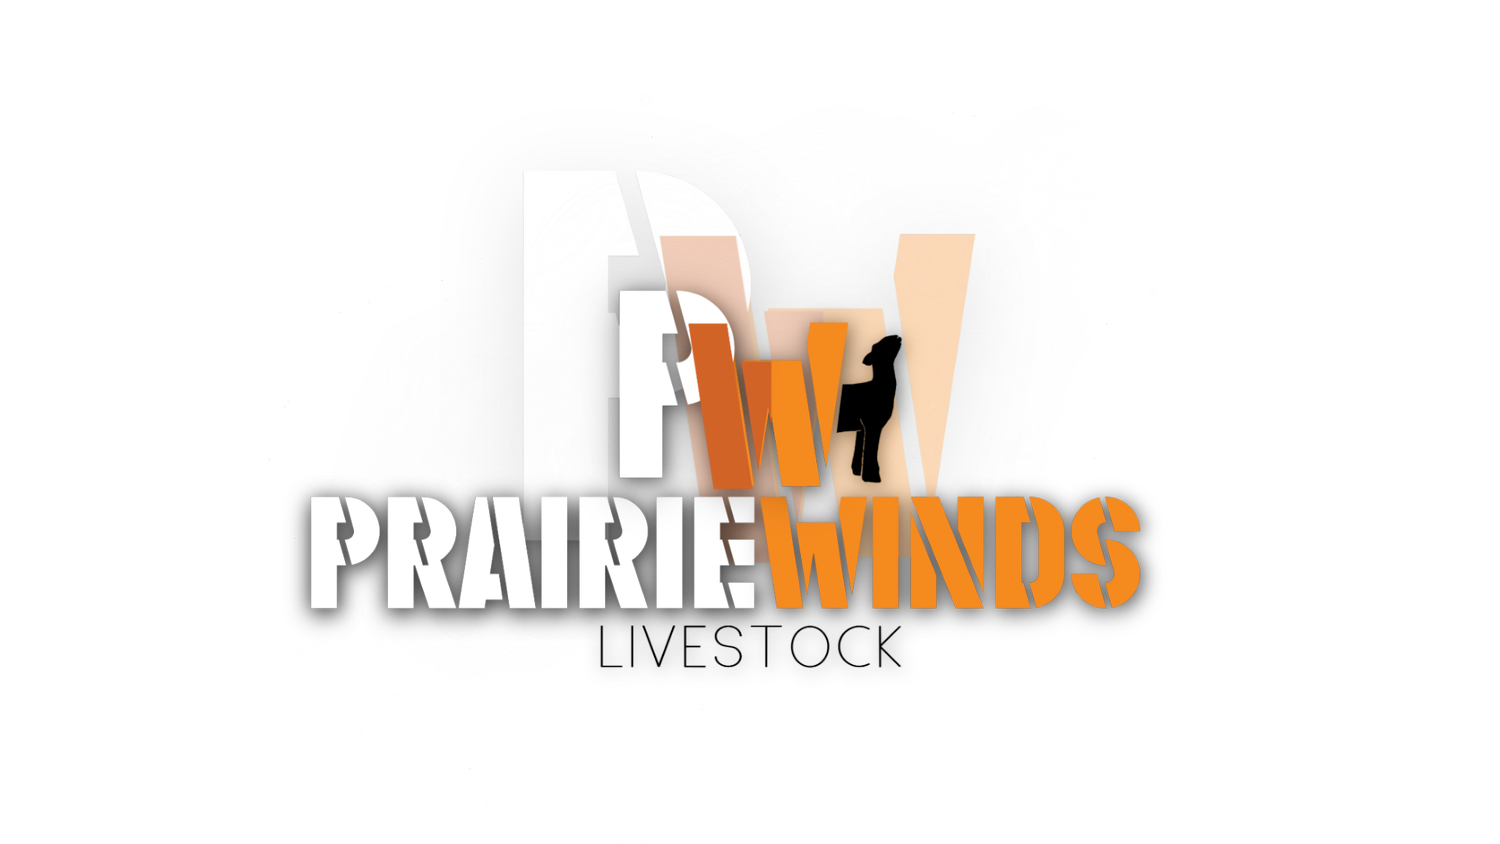 Prairie Winds Livestock